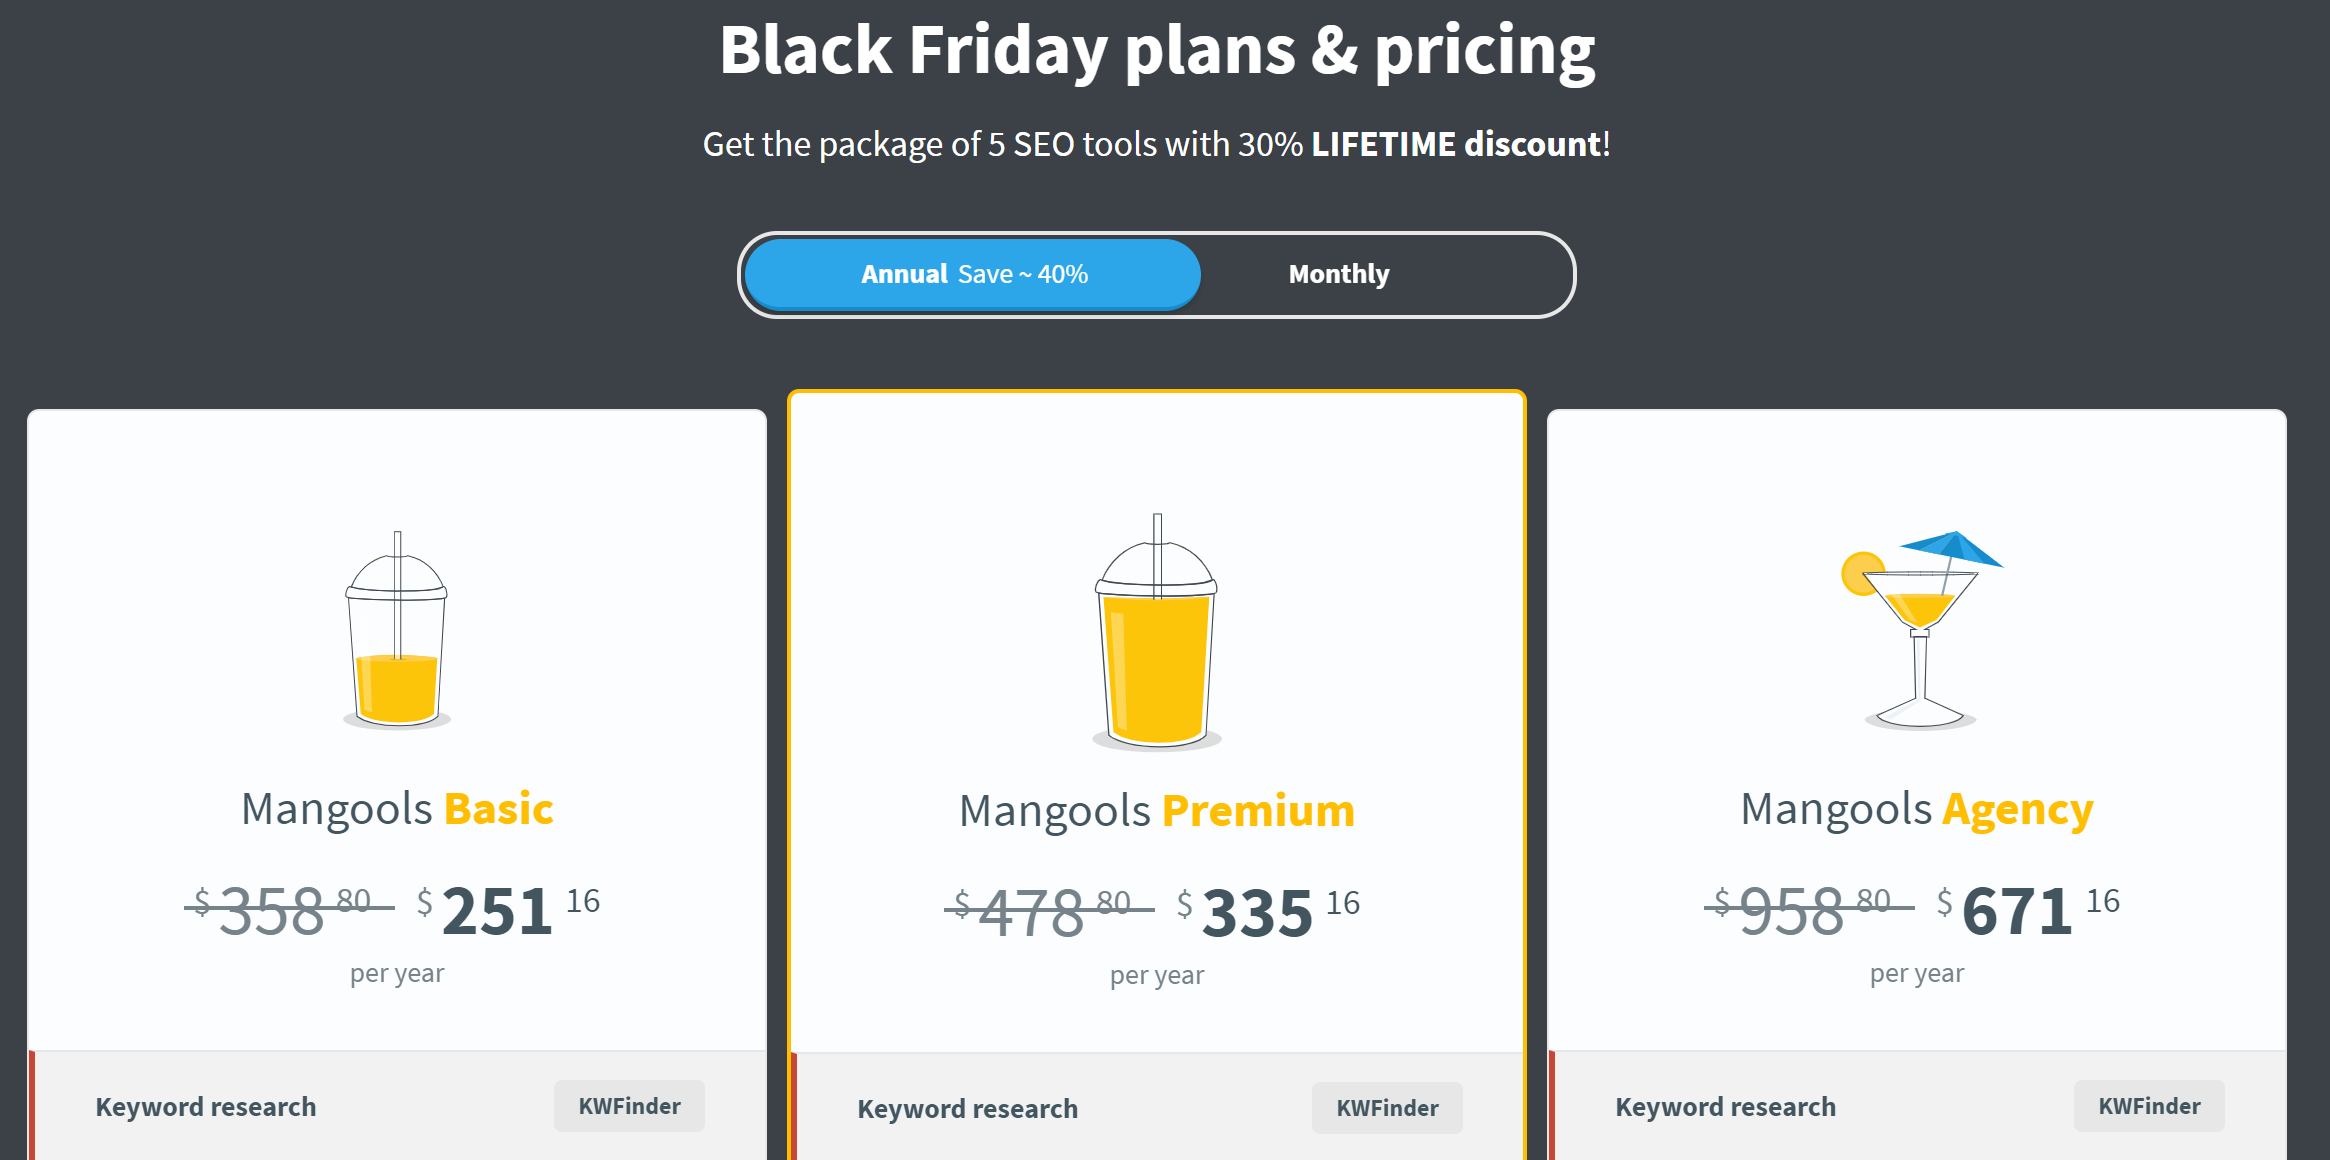 Mangools Black Friday Plans & Pricing 